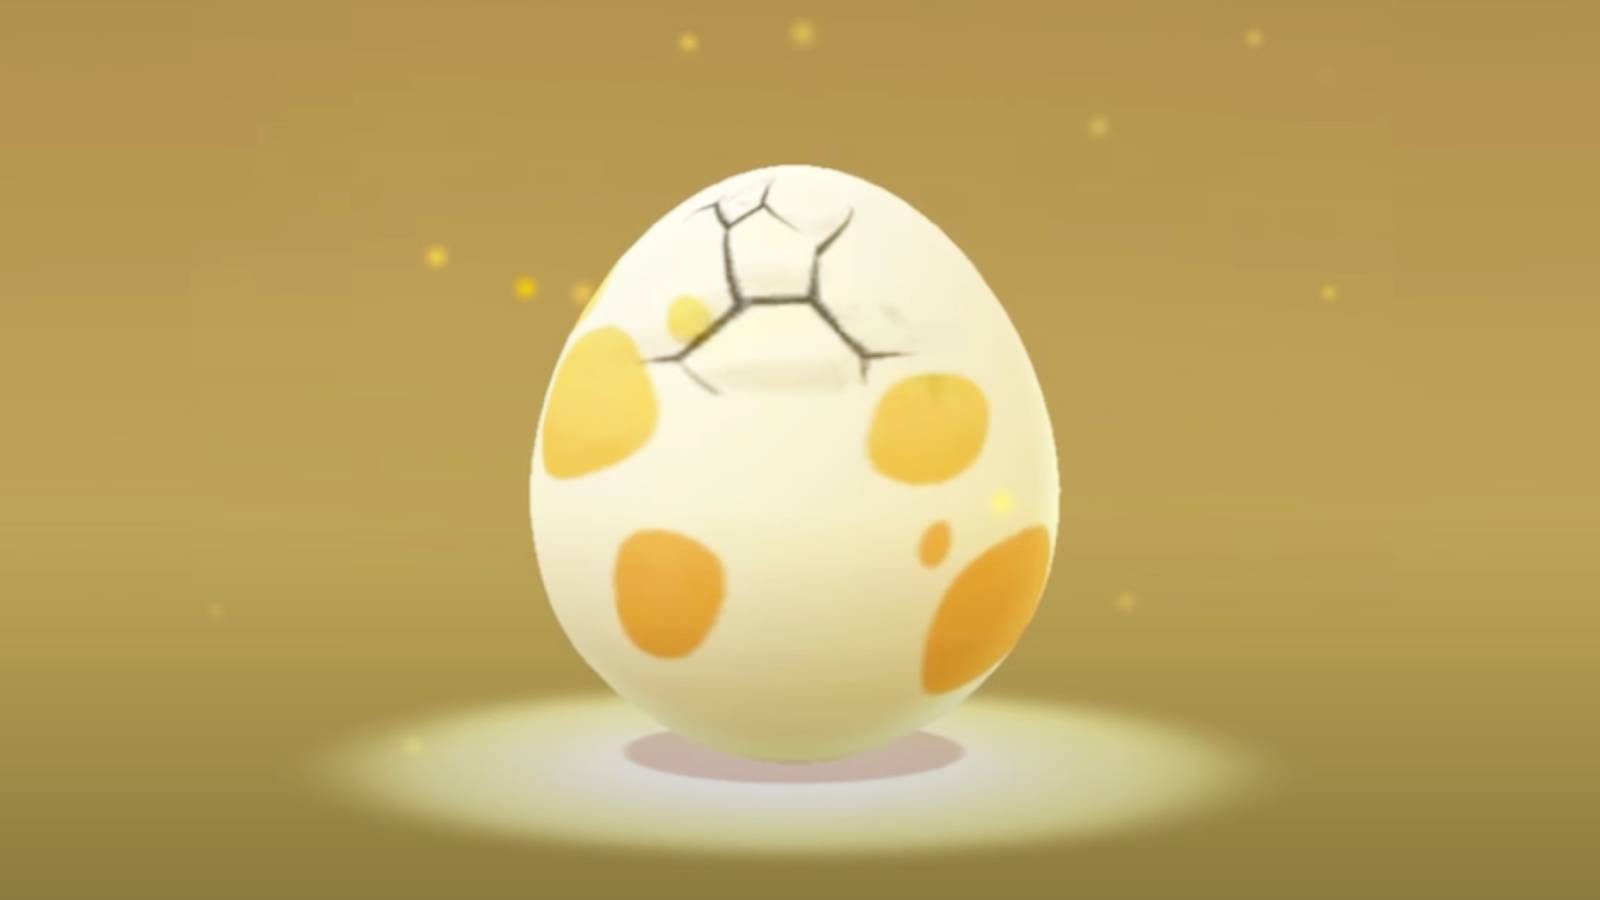 A gameplay screenshot shows a Pokemon Go egg hatching